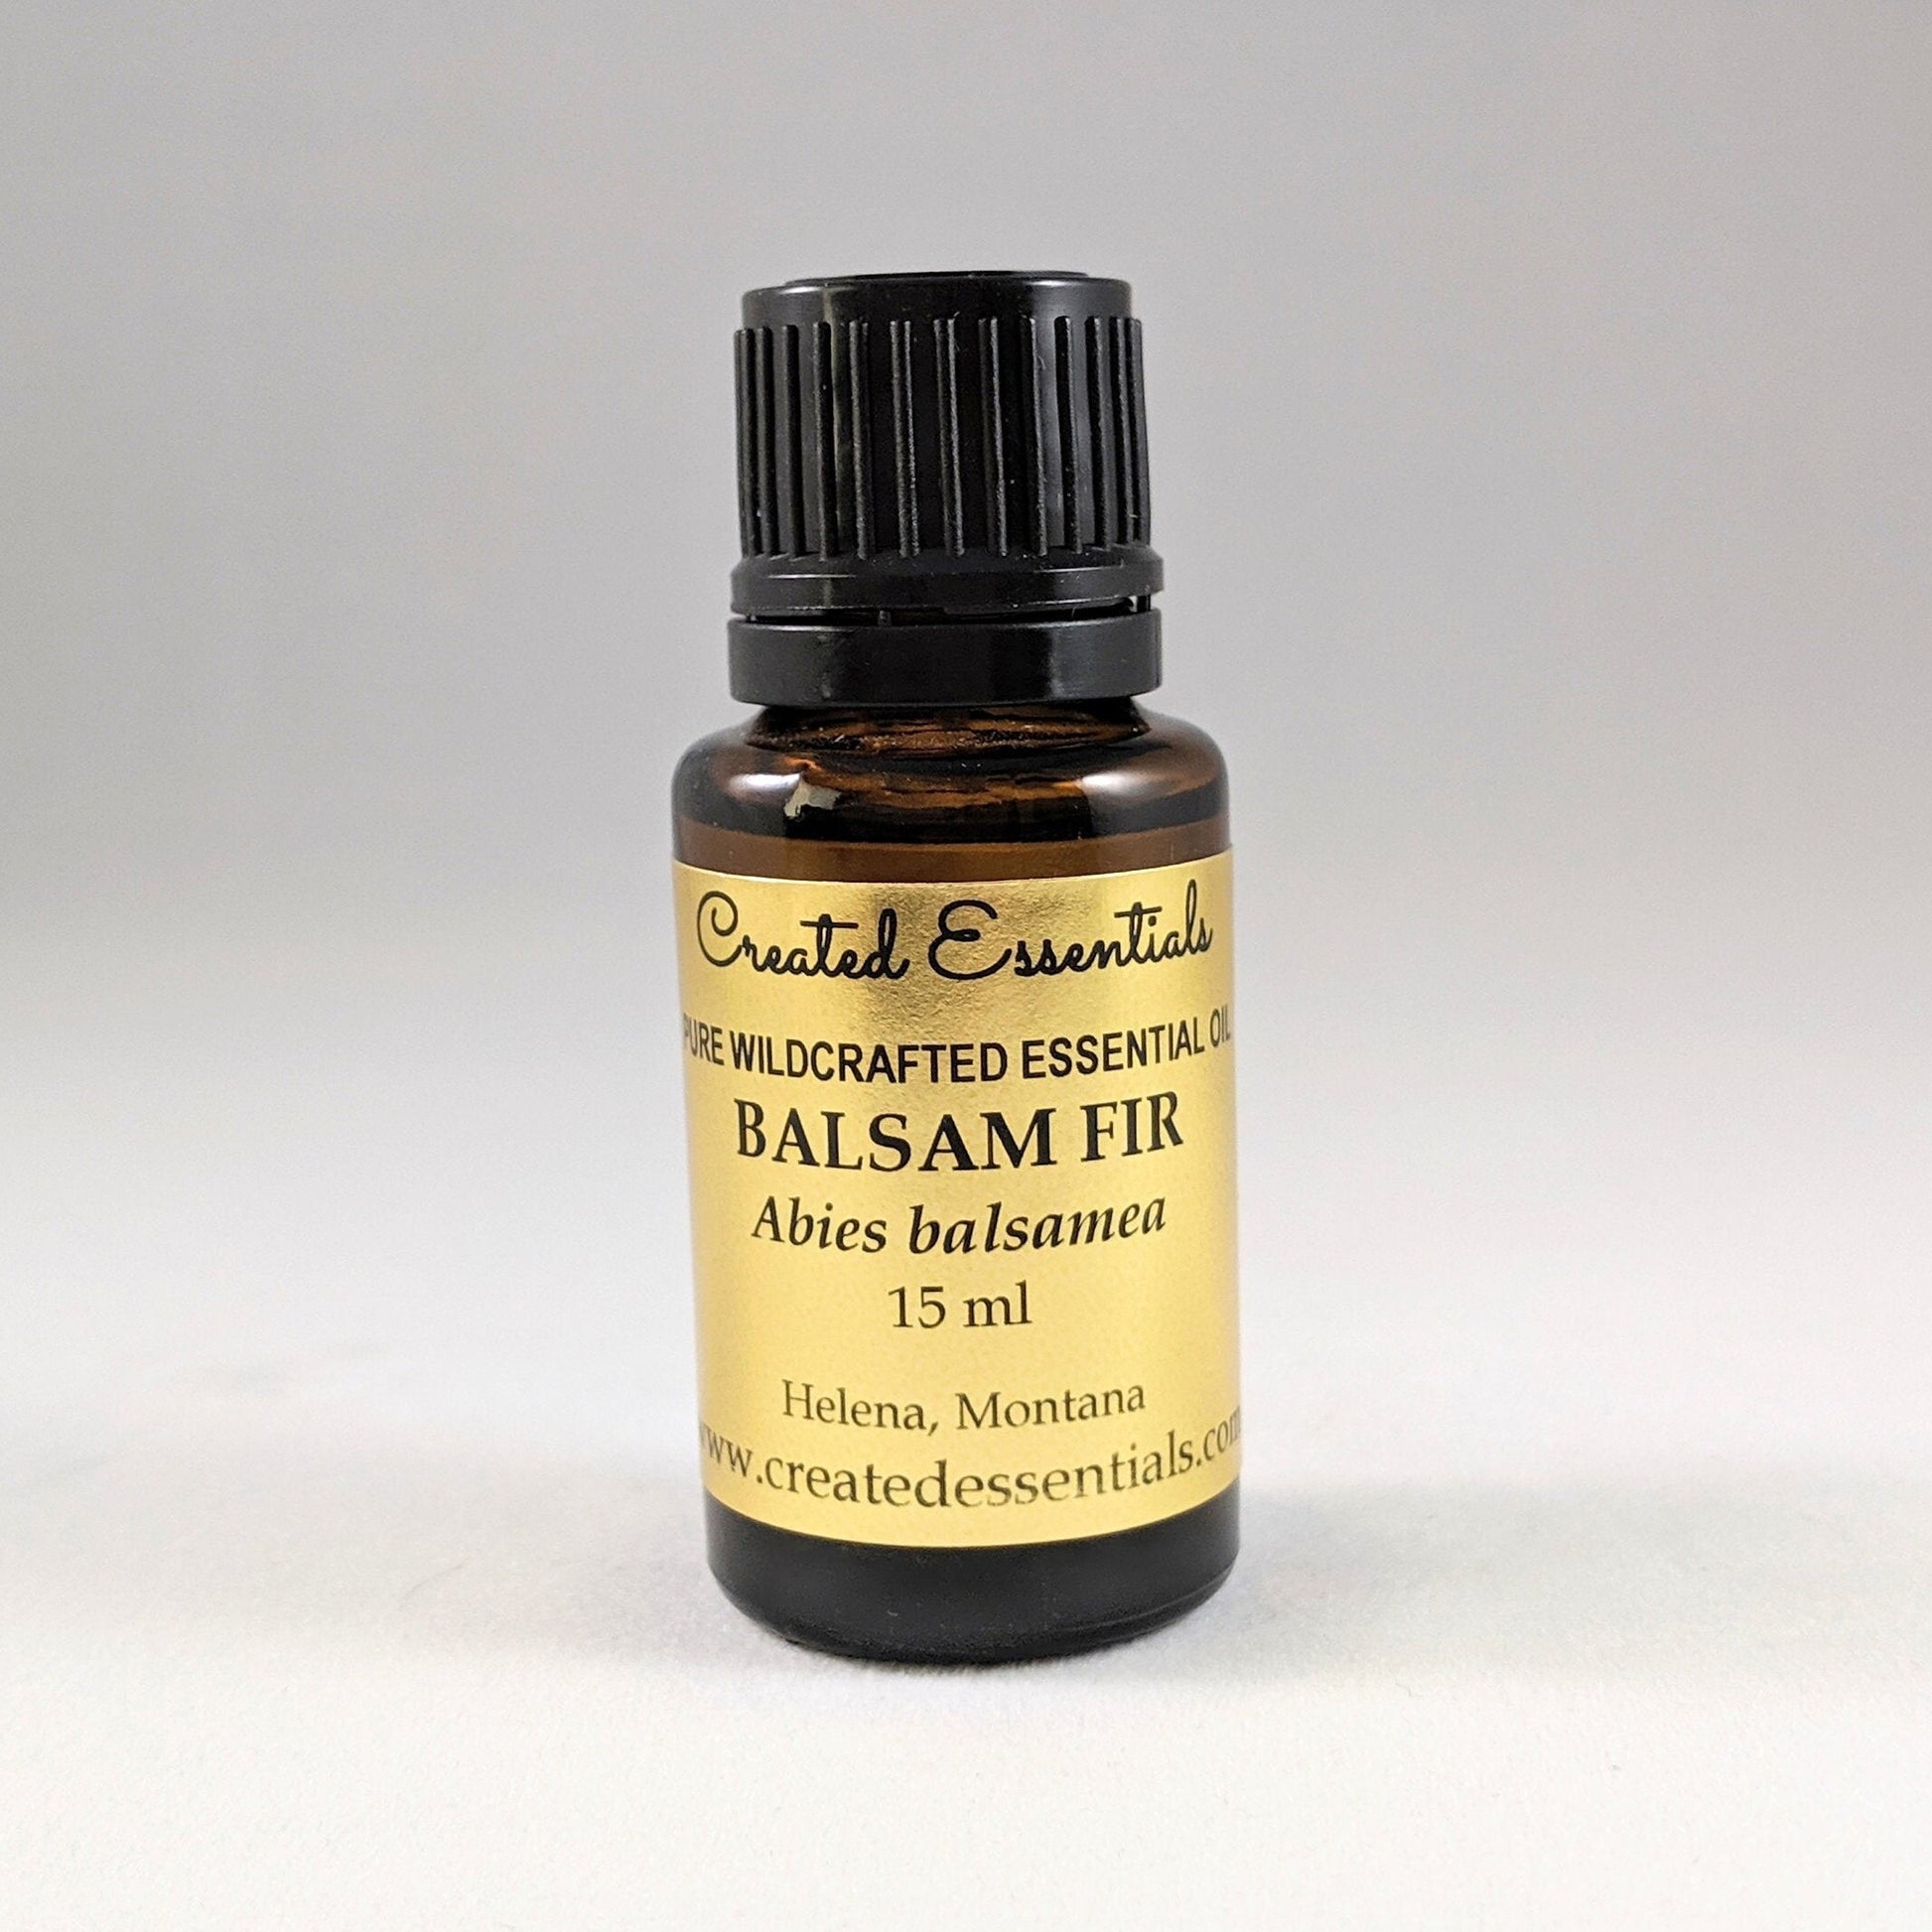 Balsam Fir Essential Oil | Wildcrafted Essential Oil Balsam Fir | 100 % Pure Essential Oil | Balsam Fir Aromatherapy Oil